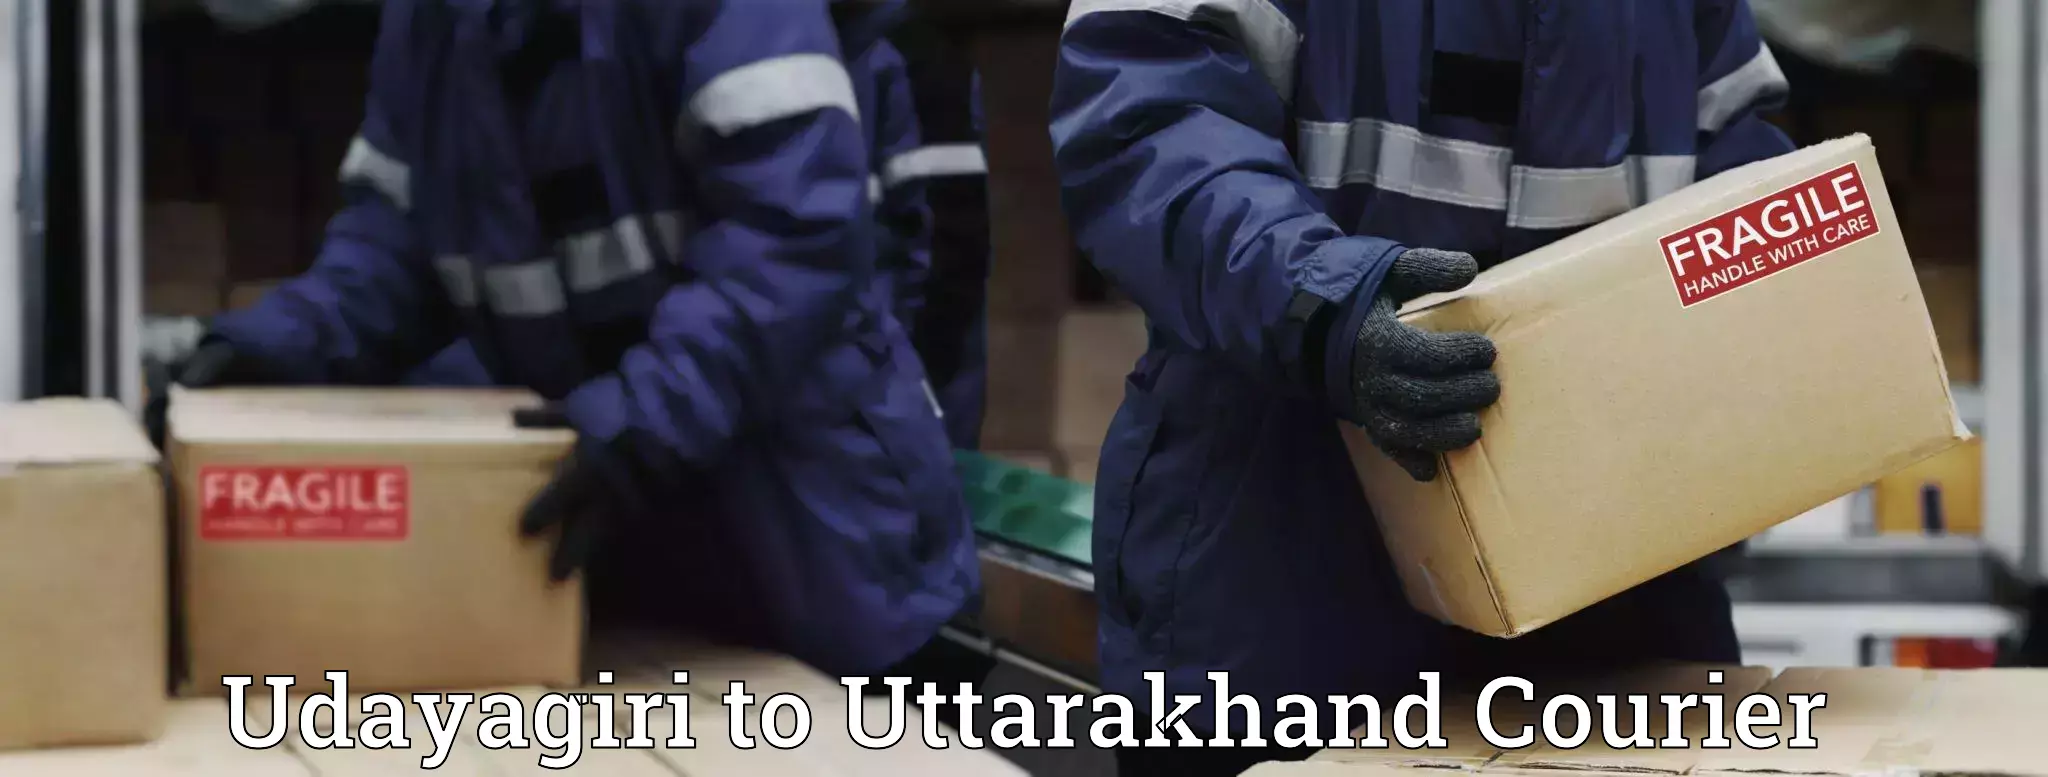 Courier service comparison Udayagiri to Uttarkashi